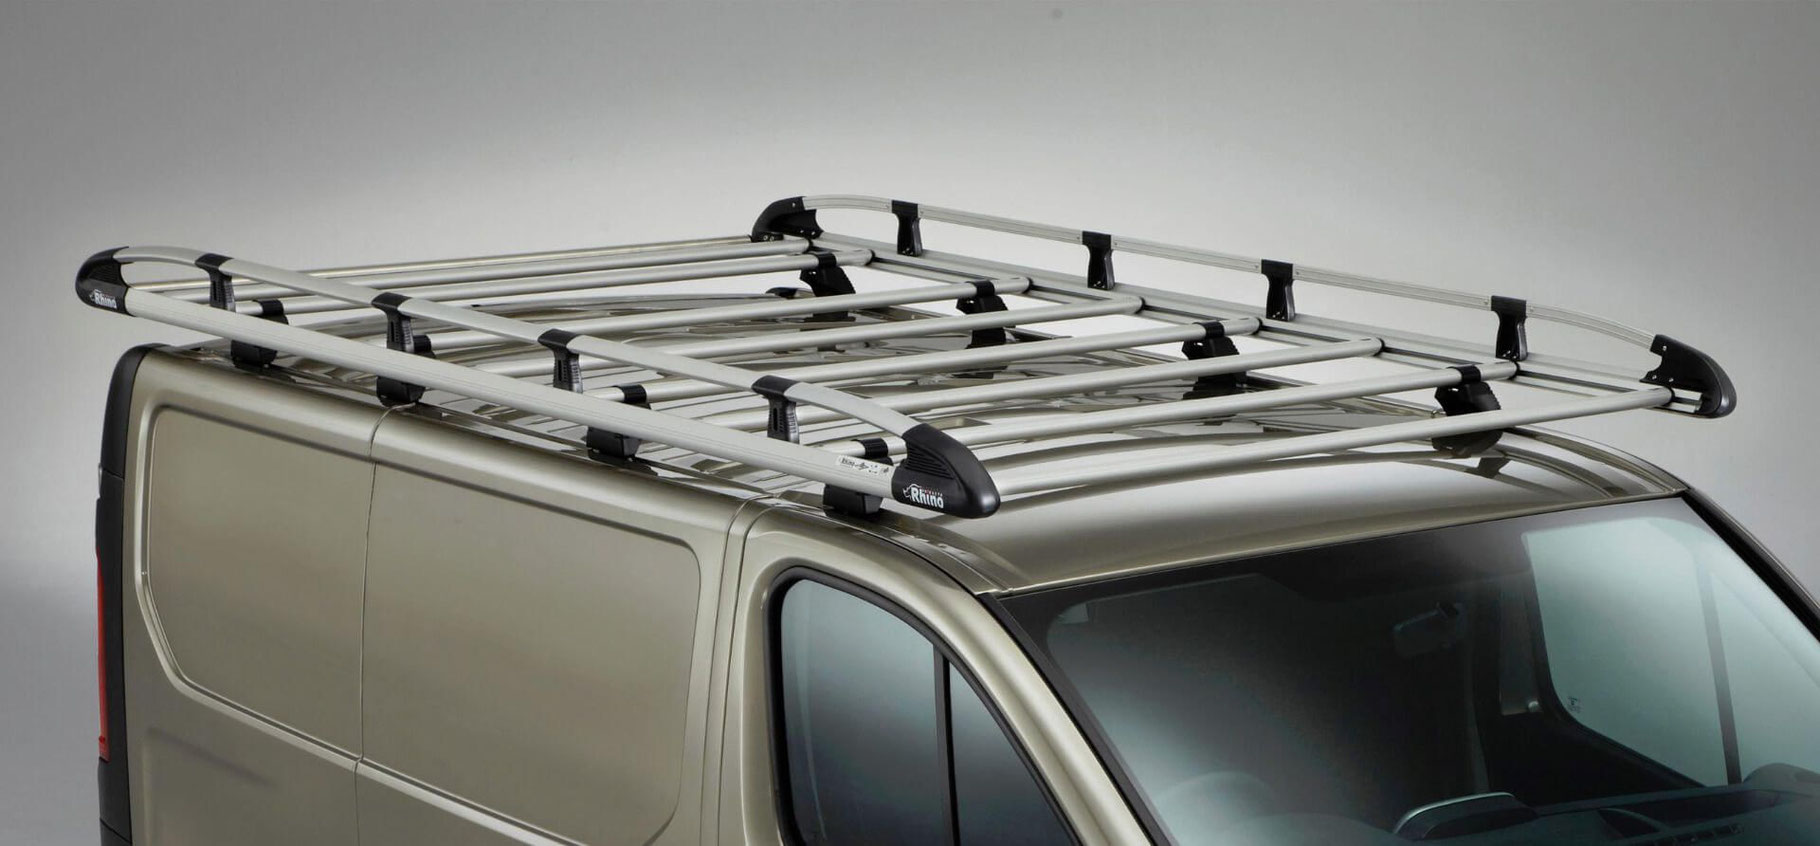 Багажник на крышу автомобиля можно. Багажник на крышу Рено трафик. Thule багажник на крышу Roof Racks. Экспедиционный багажник Рено трафик. Ford Ranger багажник.